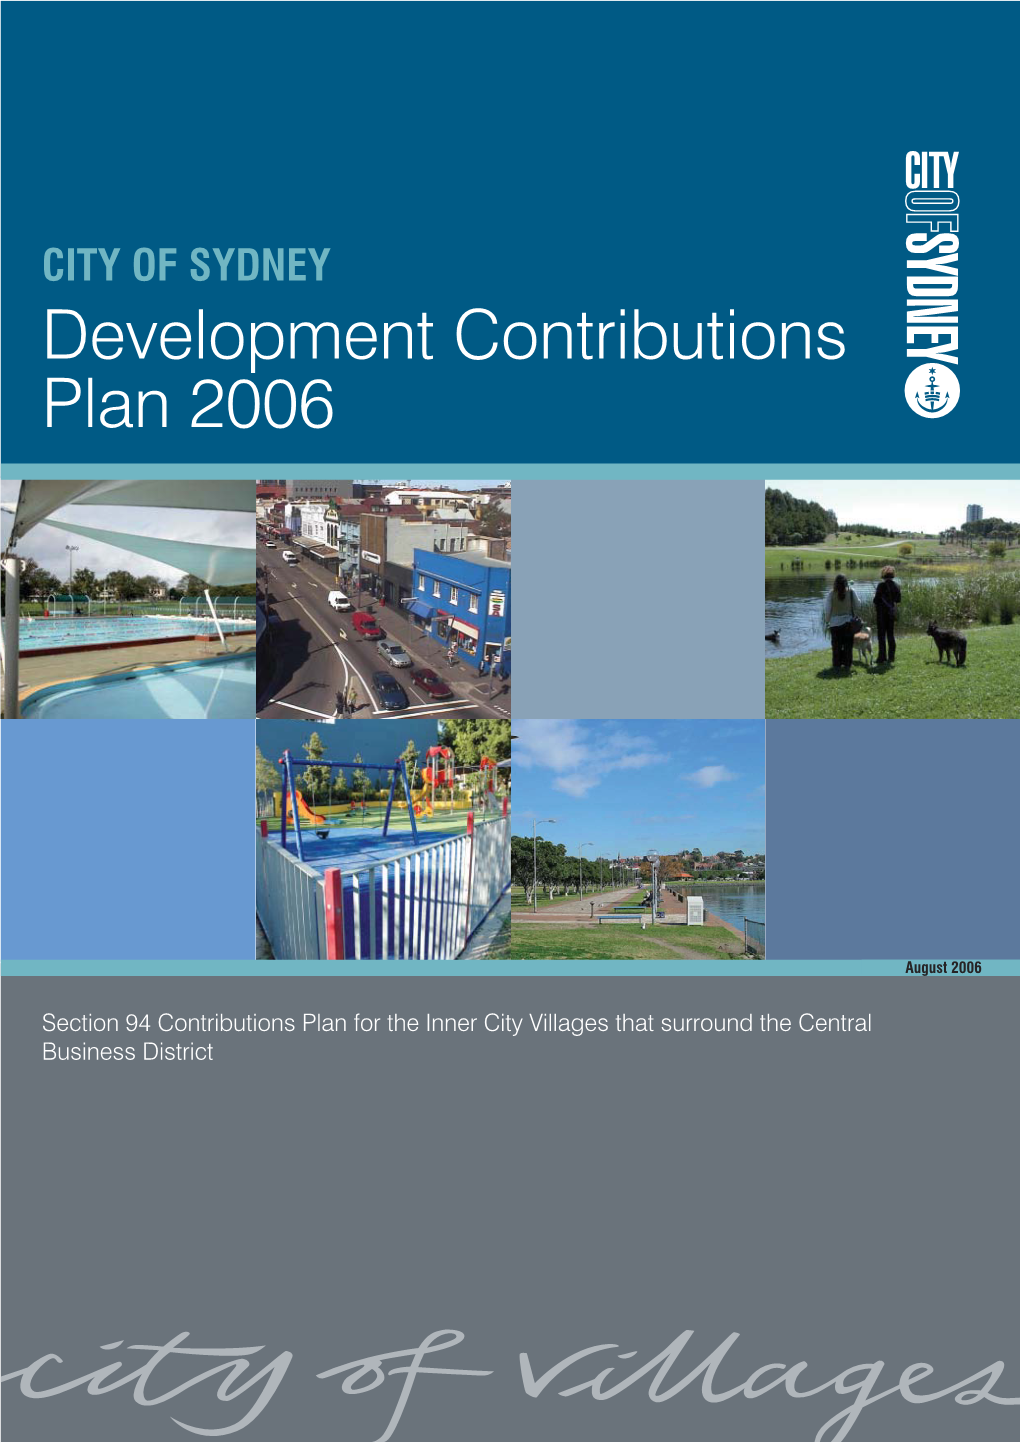 CITY of SYDNEY Development Contributions Plan 2006